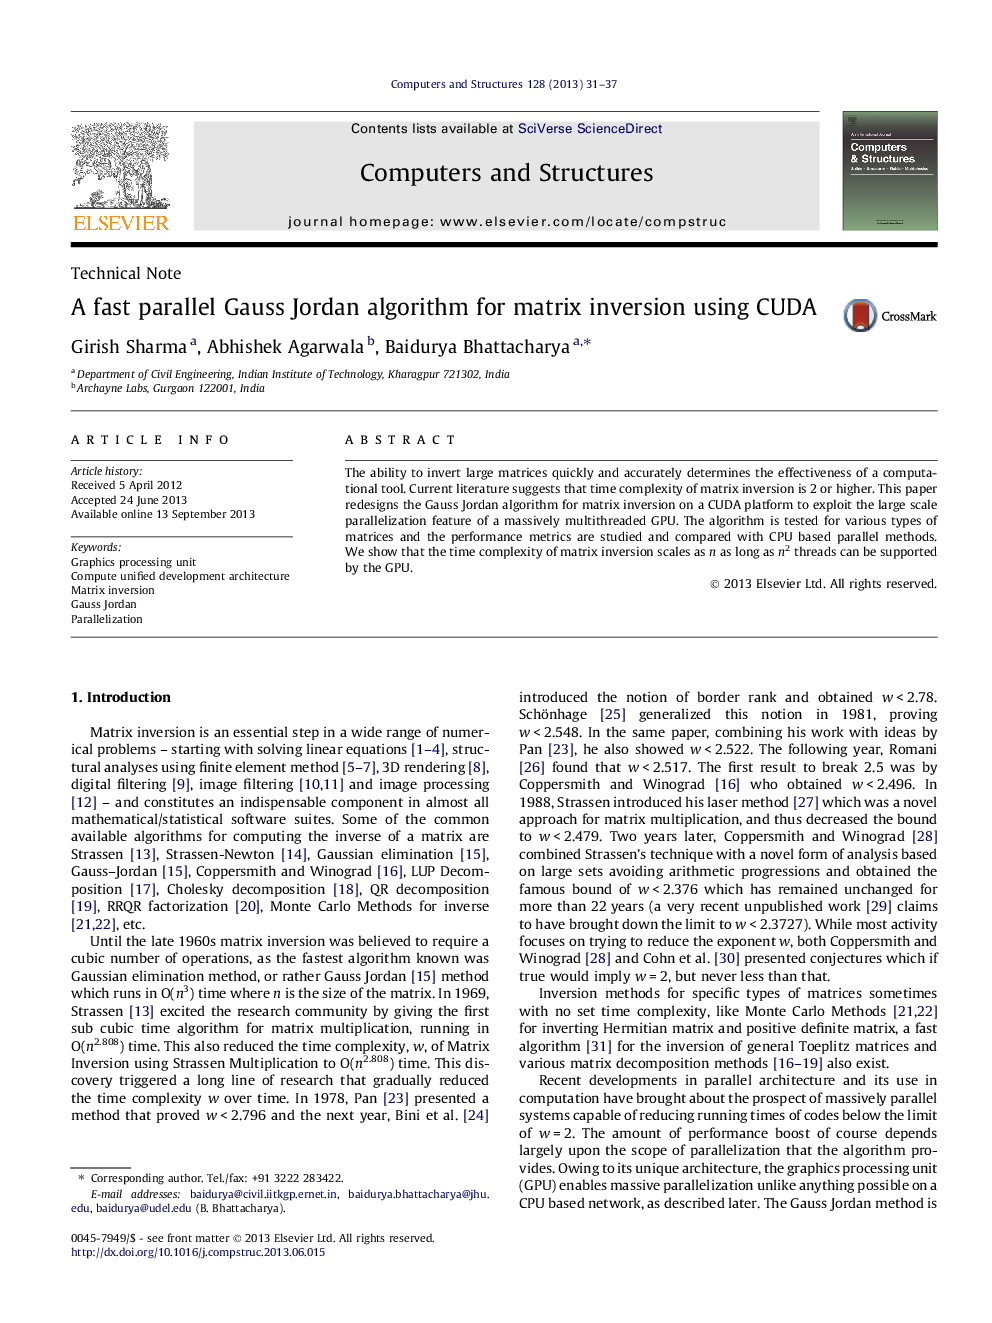 A fast parallel Gauss Jordan algorithm for matrix inversion using CUDA